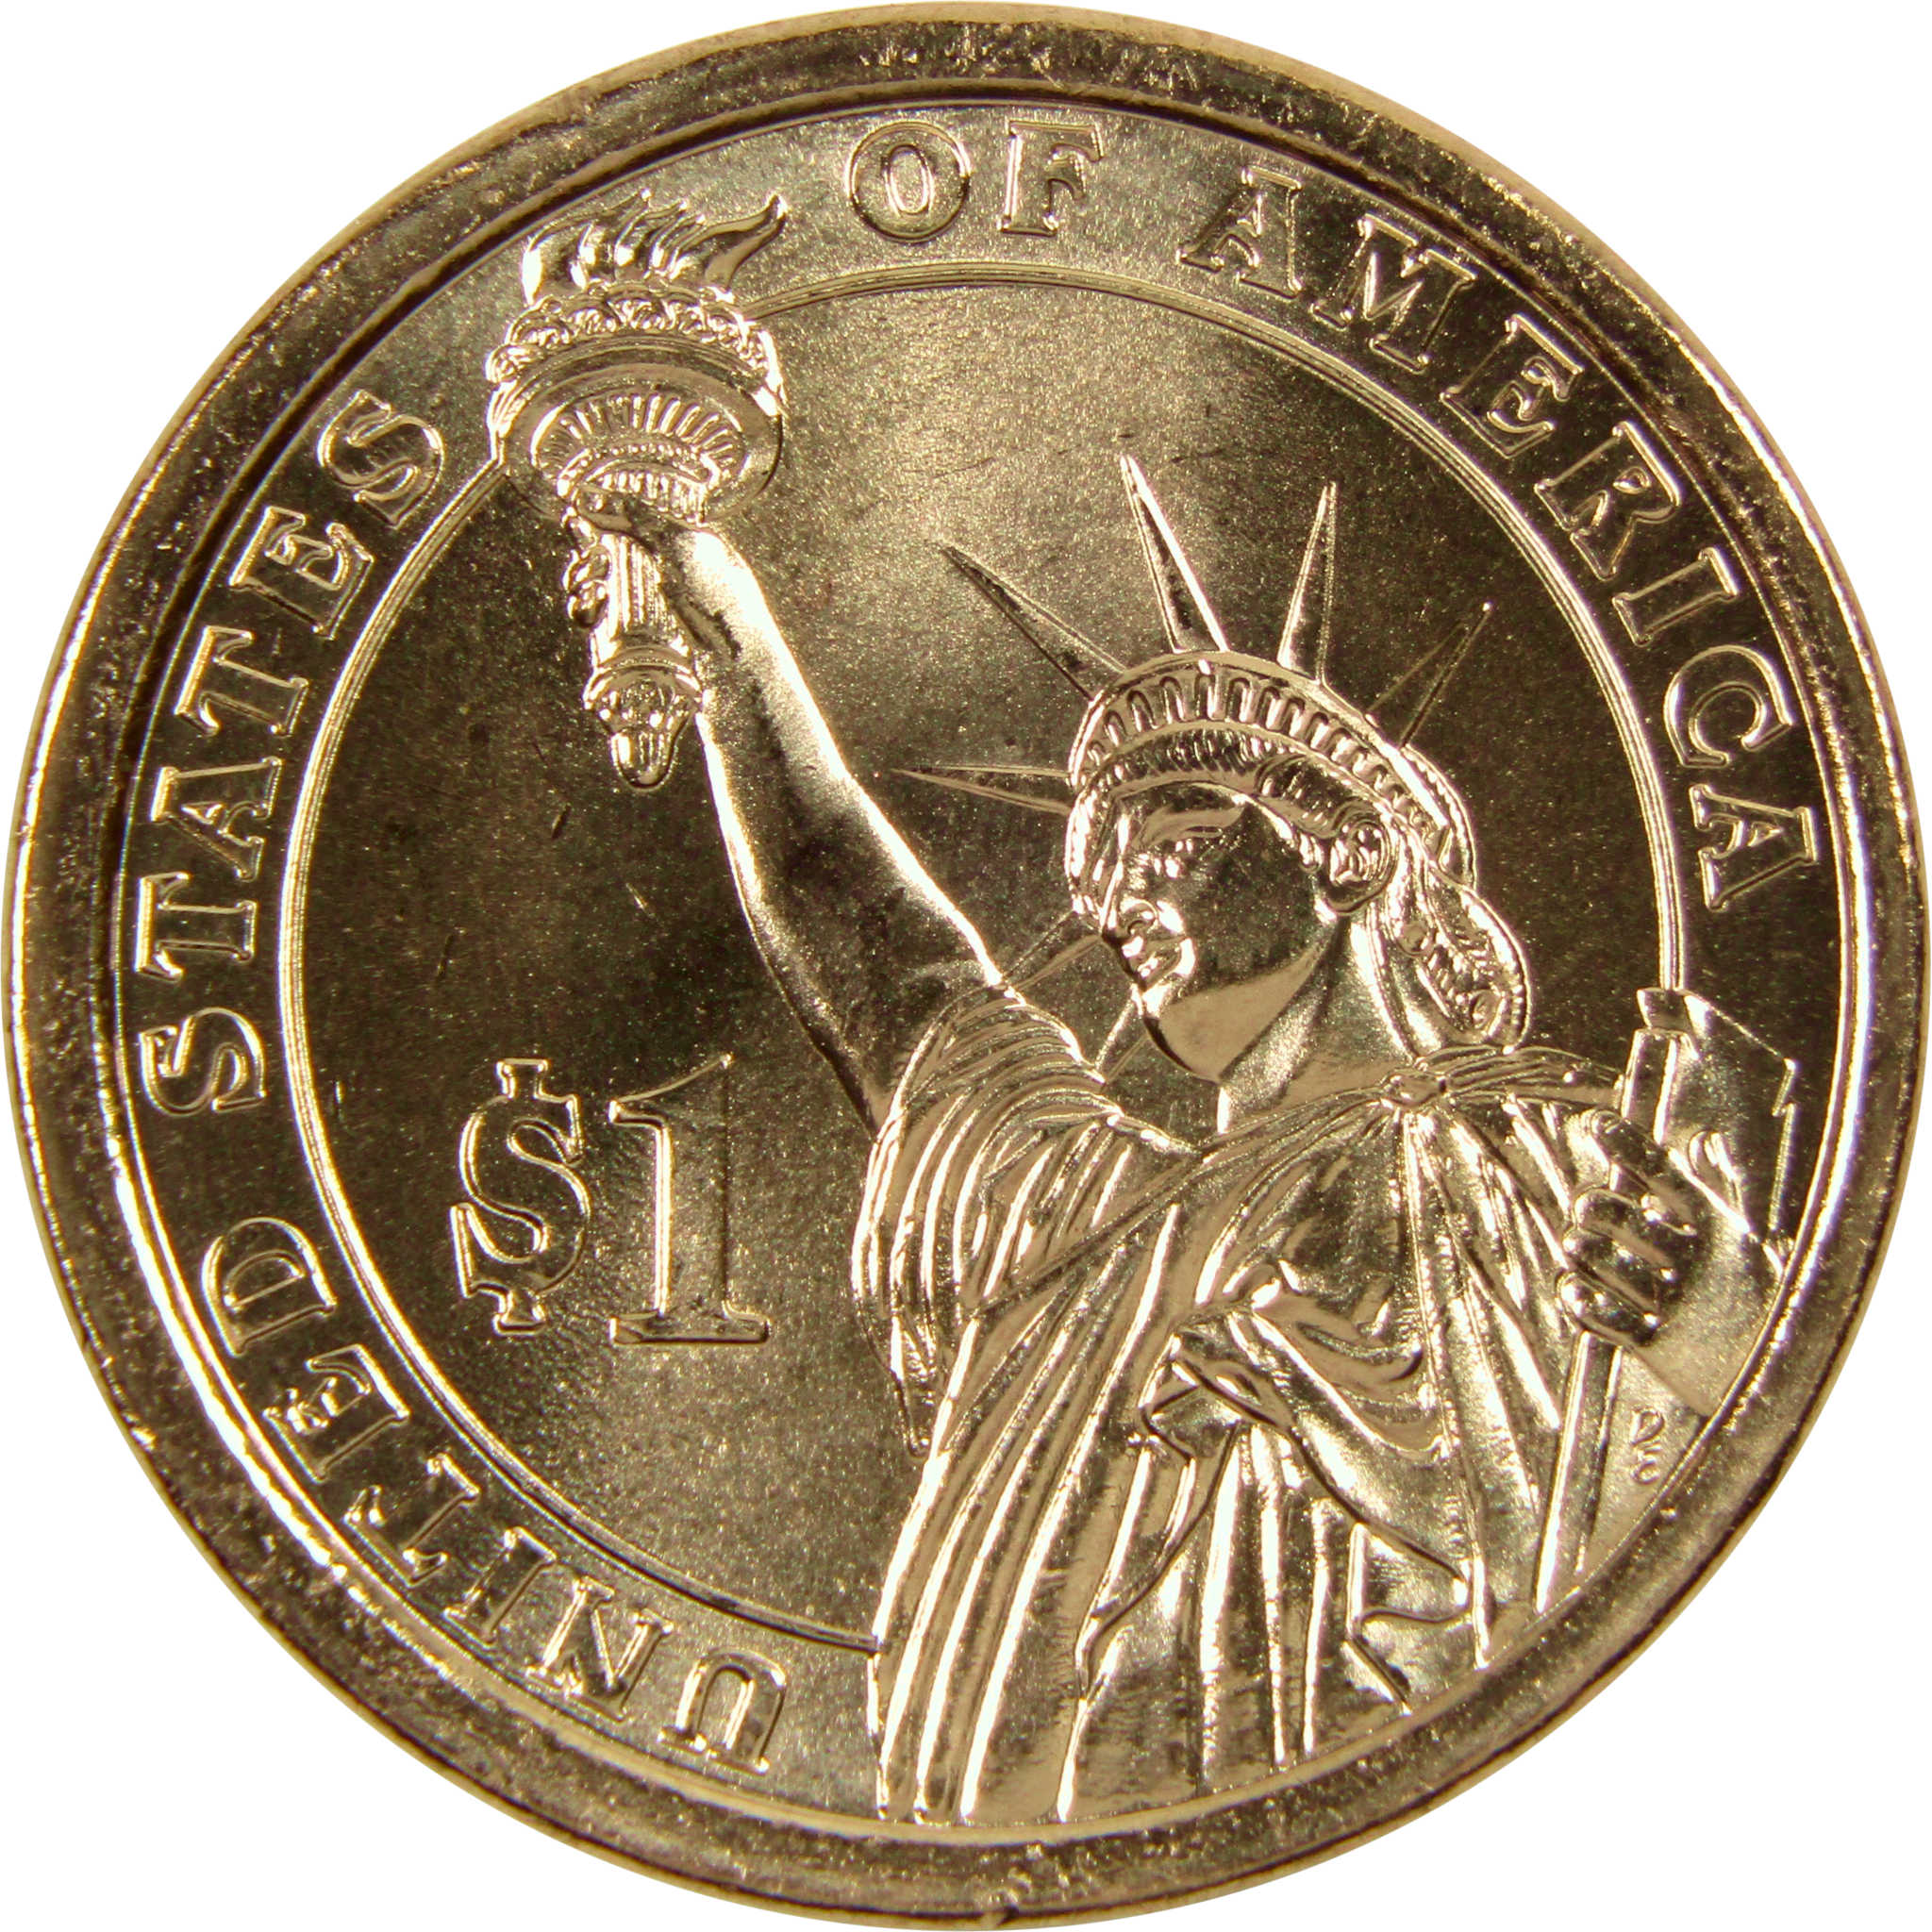 2013 P William McKinley Presidential Dollar BU Uncirculated $1 Coin